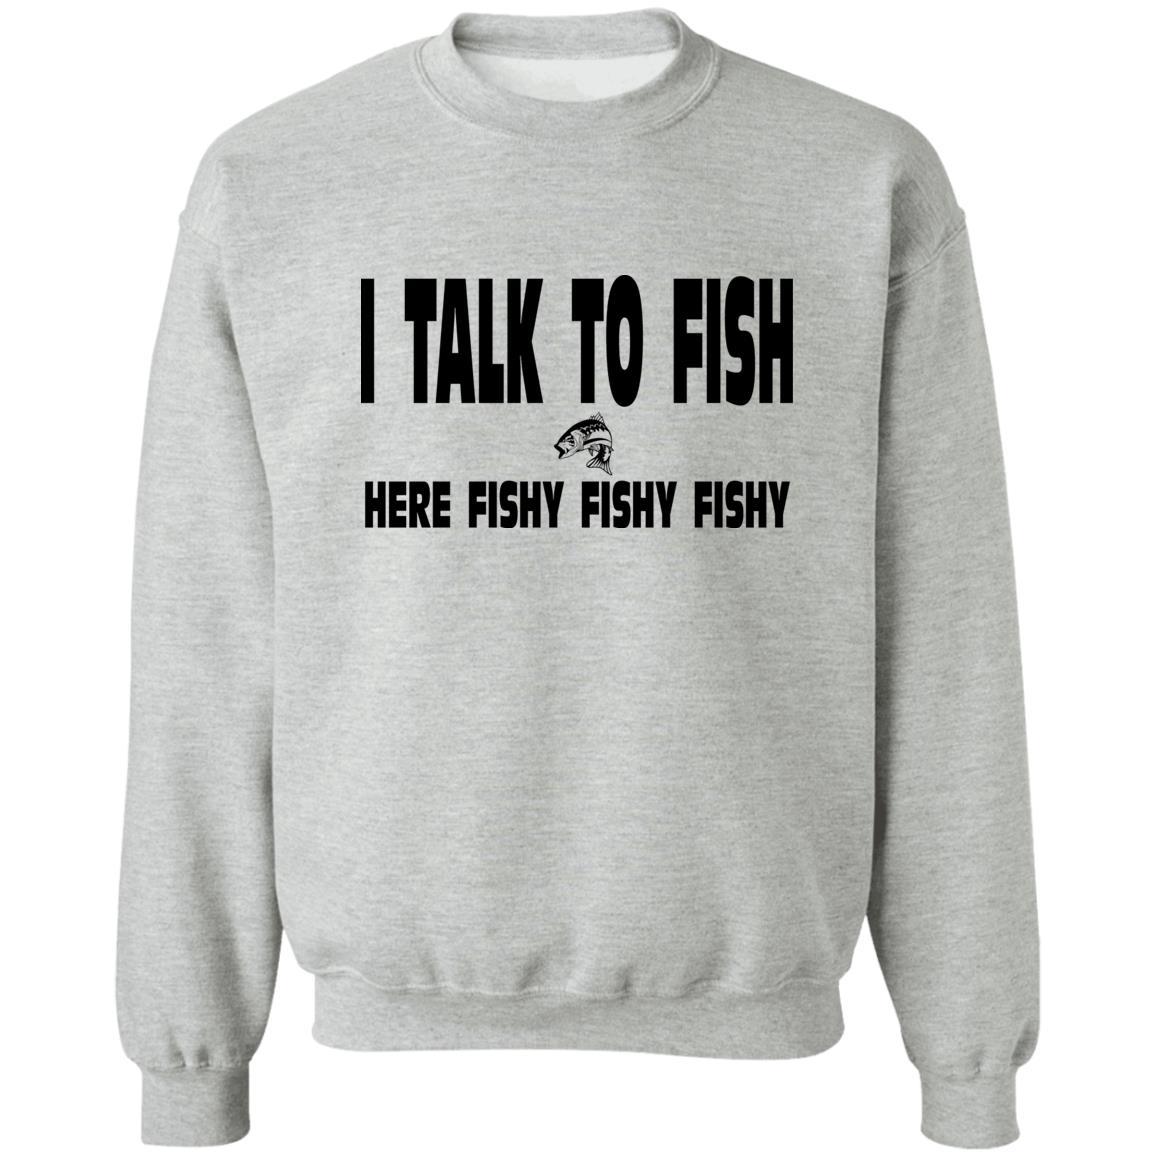 I talk to fish here fishy fishy sweatshirt b spory-grey